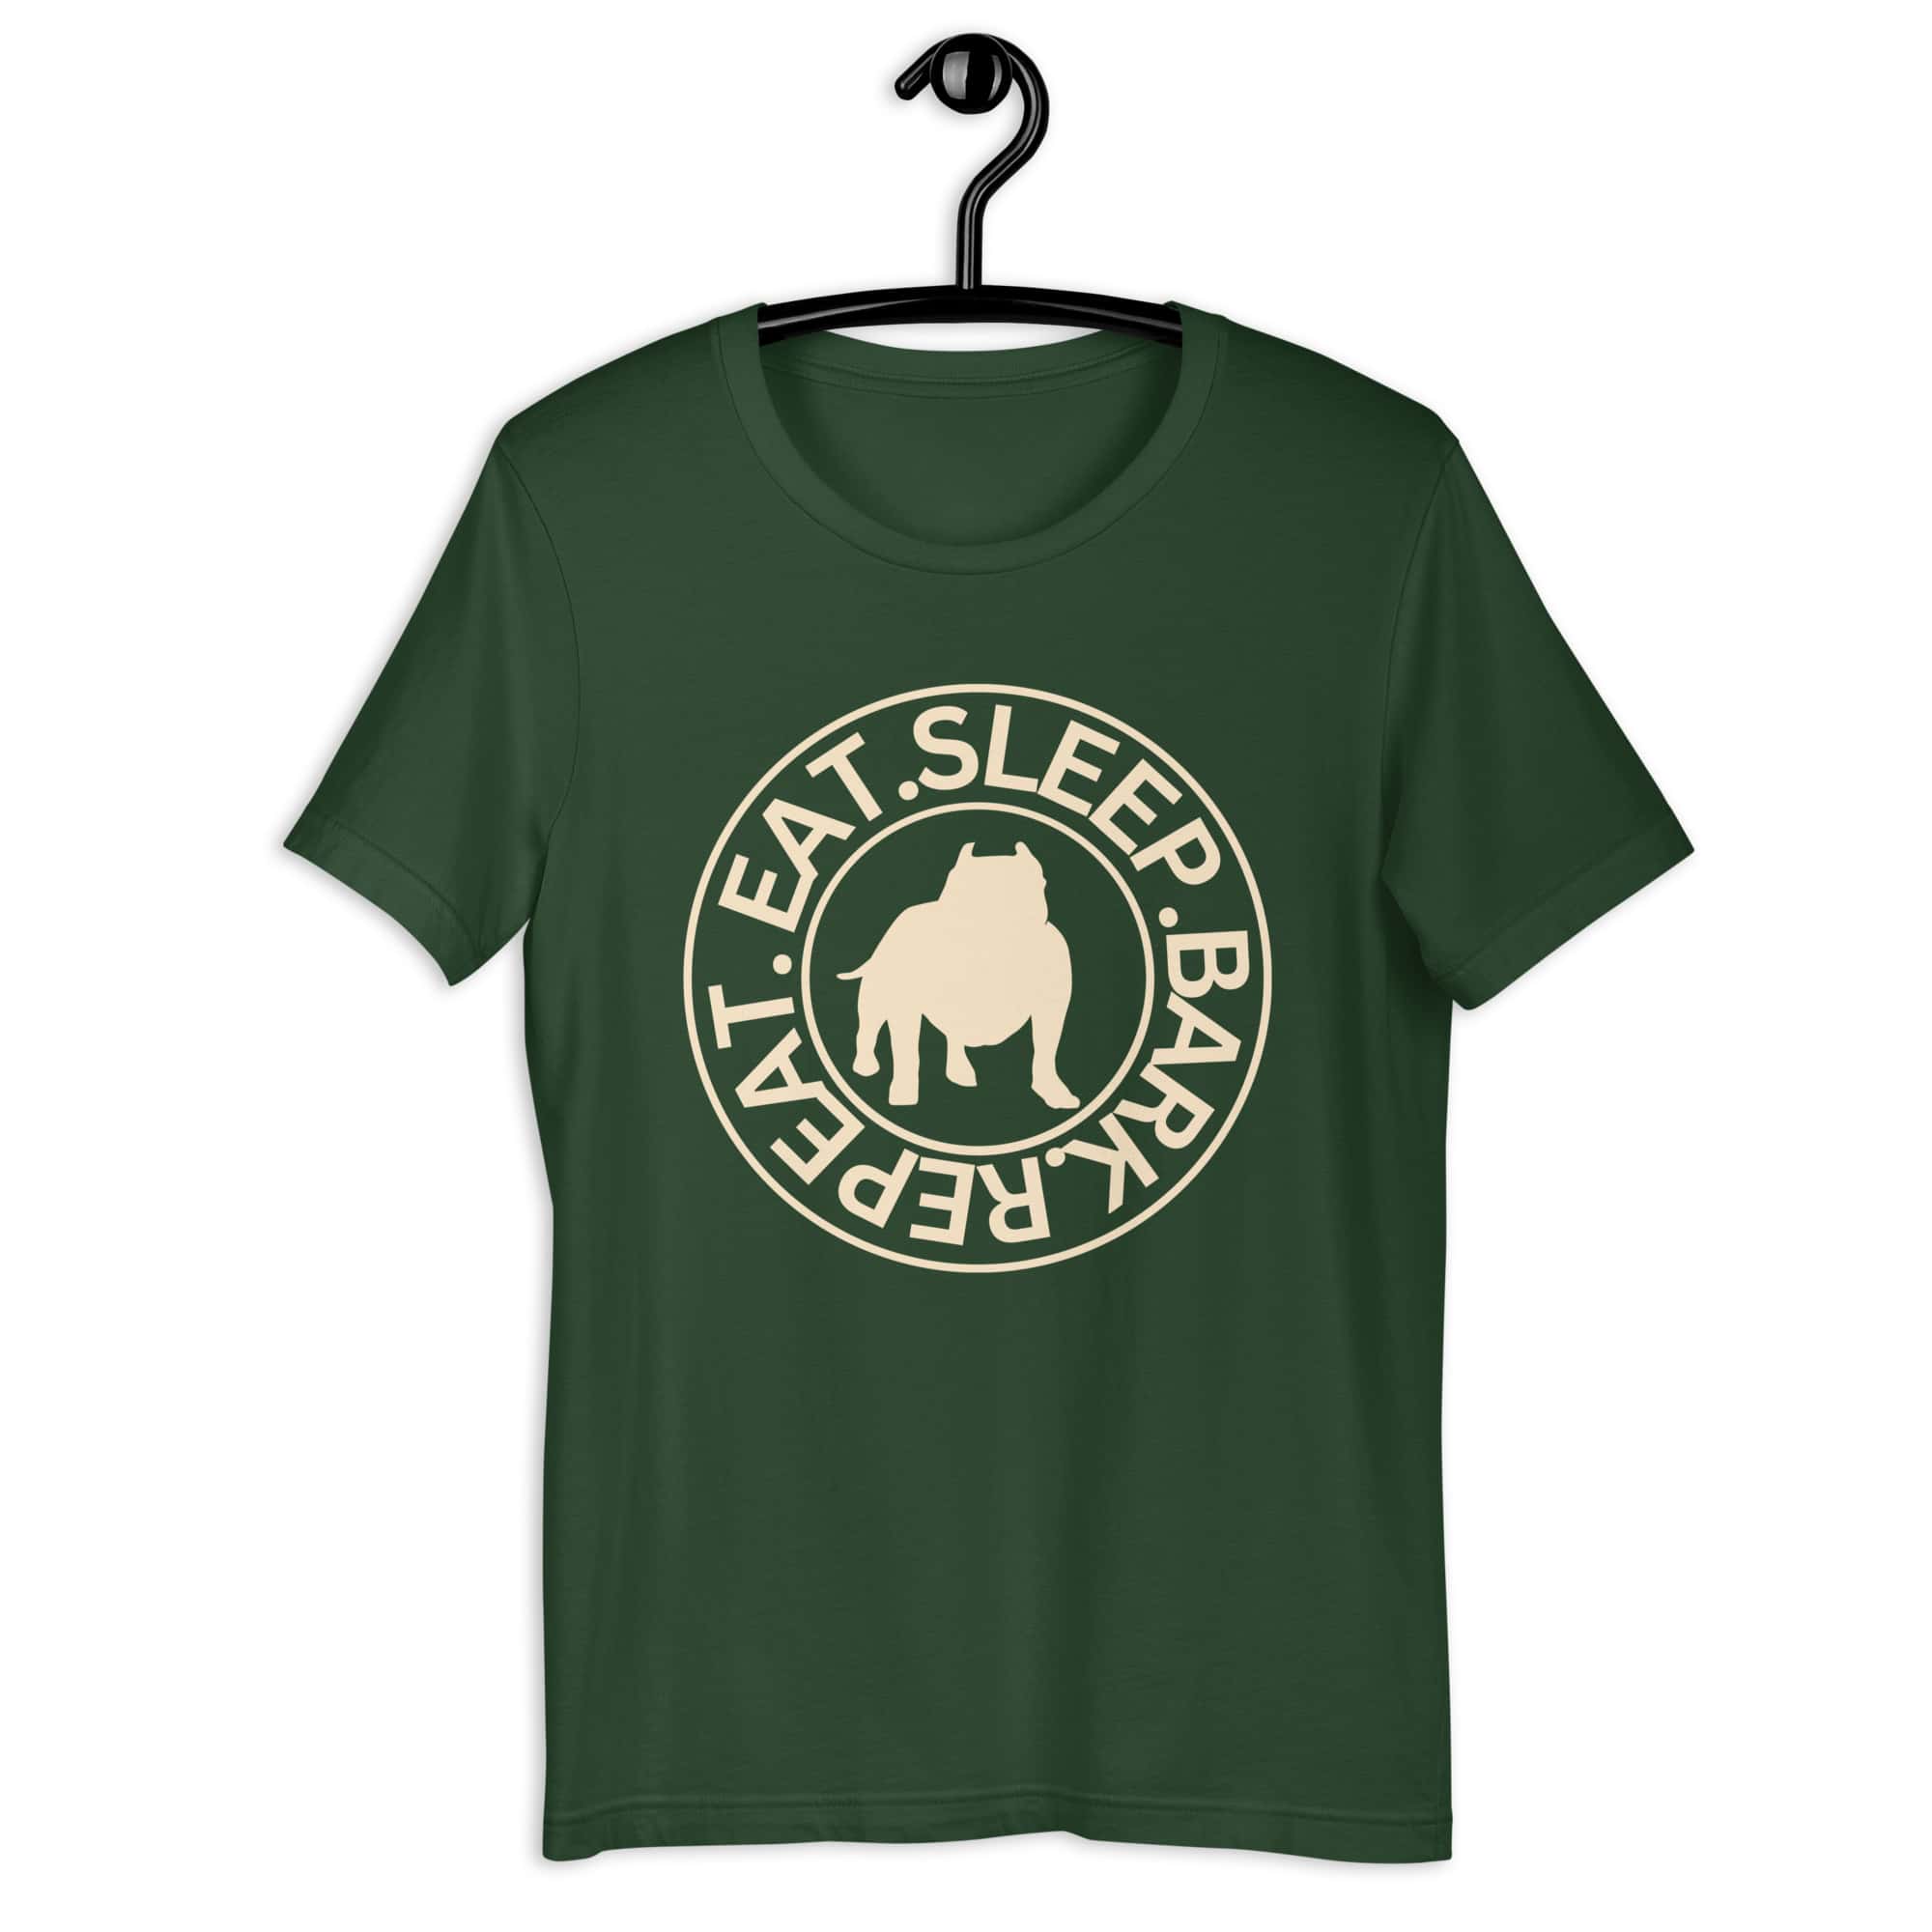 Eat Sleep Bark Repeat Bulldog Unisex T-Shirt. Forest